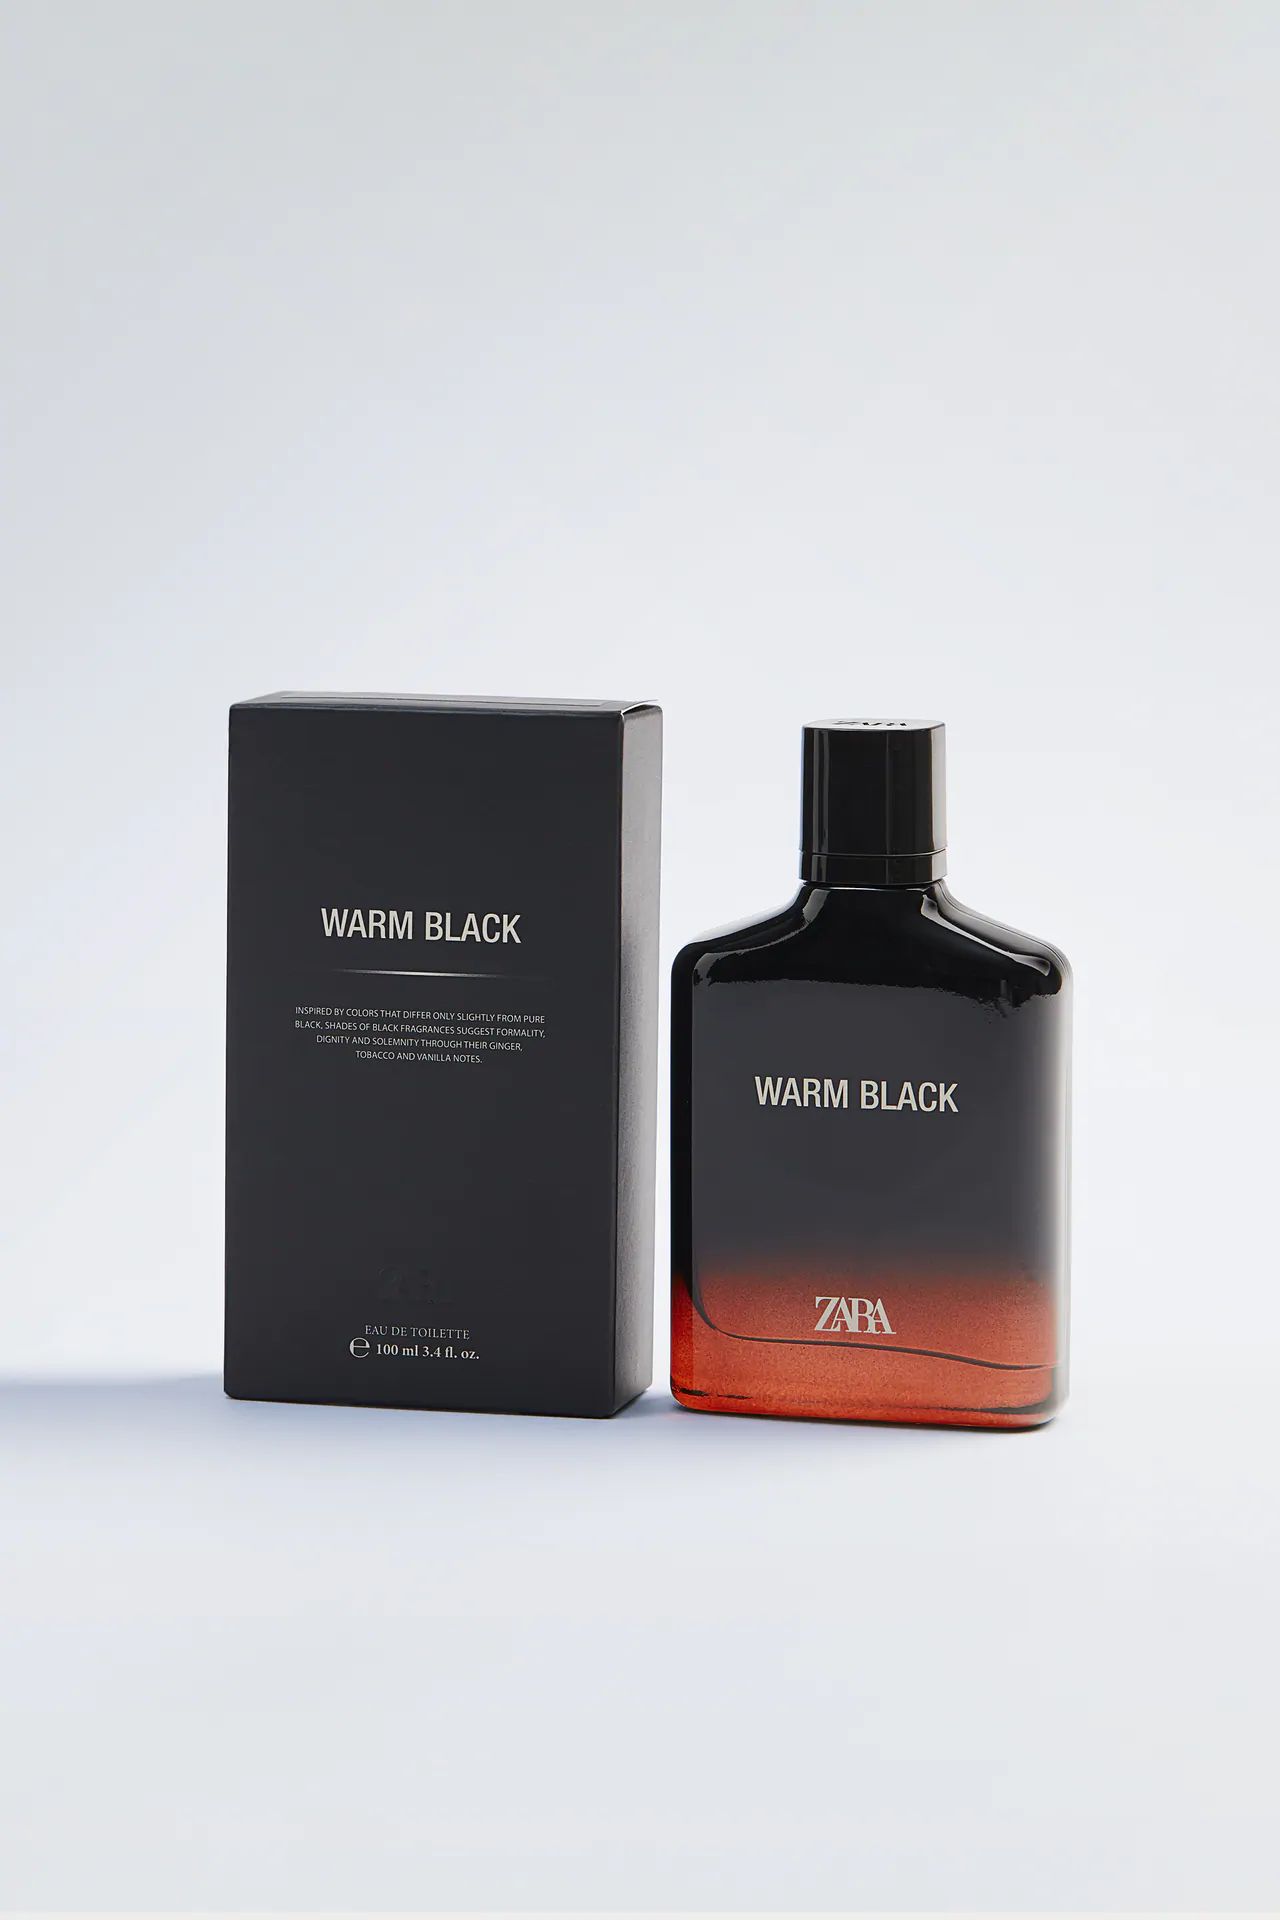 Warm Black Zara cologne - a new fragrance for men 2020